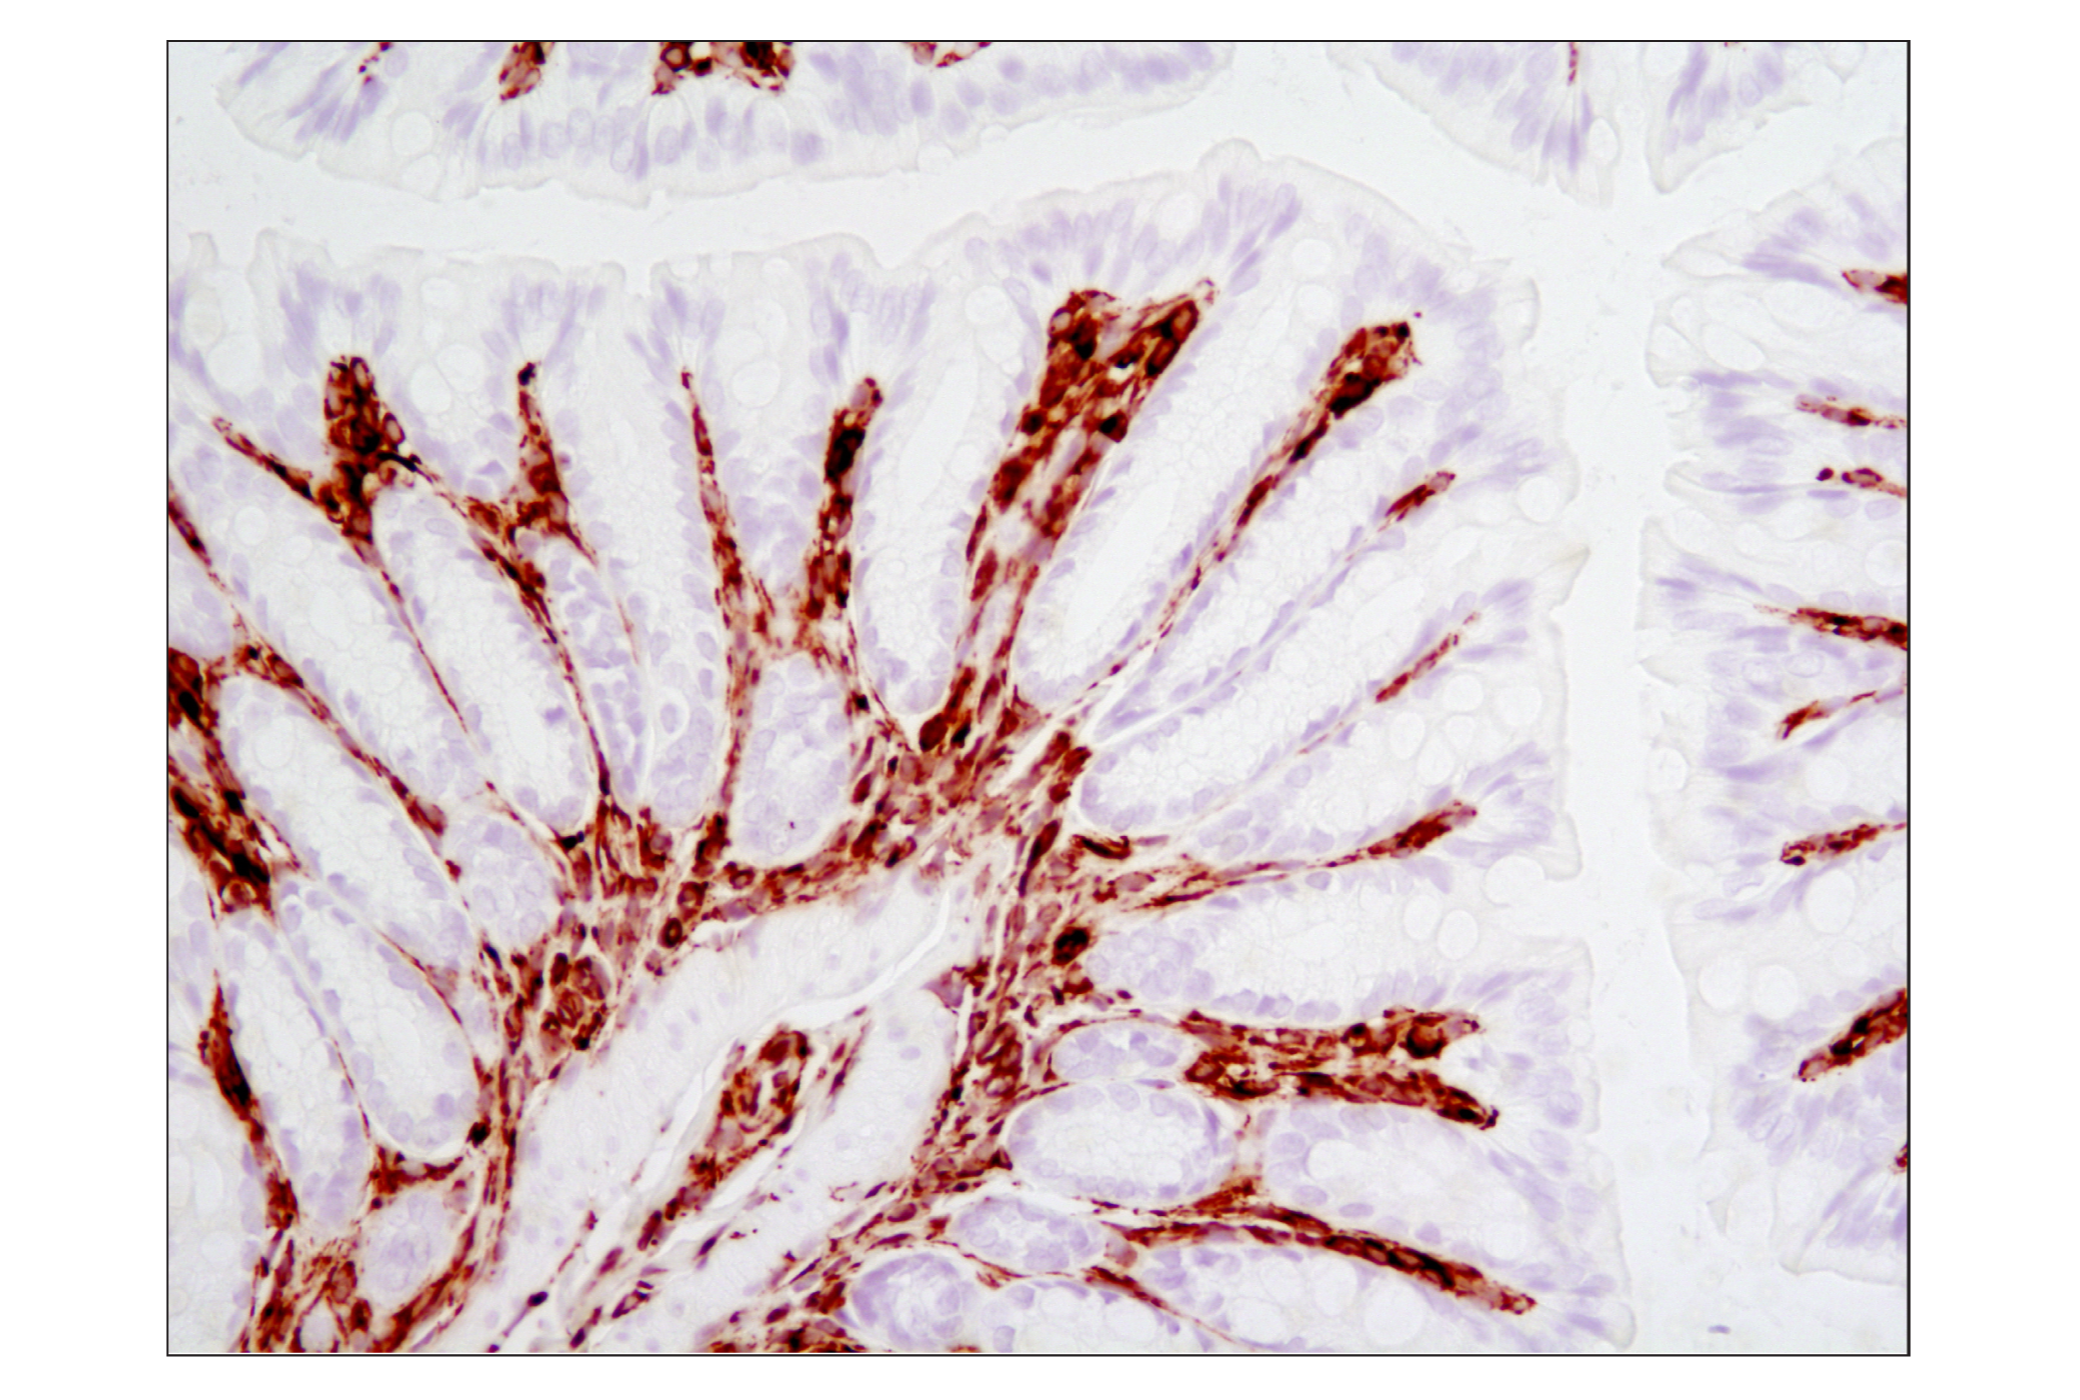  Image 52: Epithelial-Mesenchymal Transition (EMT) Antibody Sampler Kit